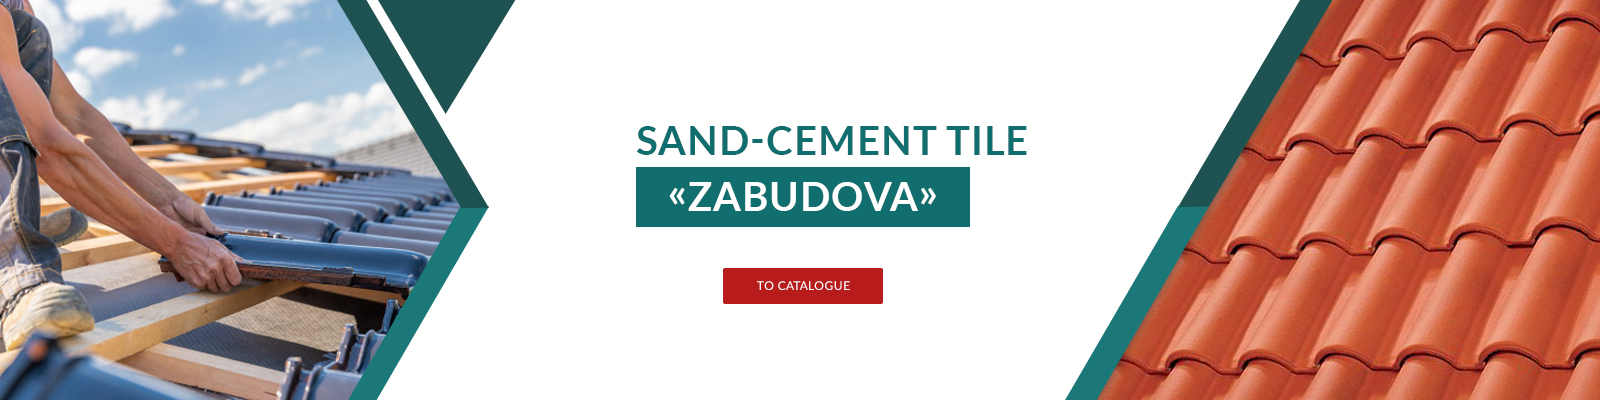 Cement-sand tiles